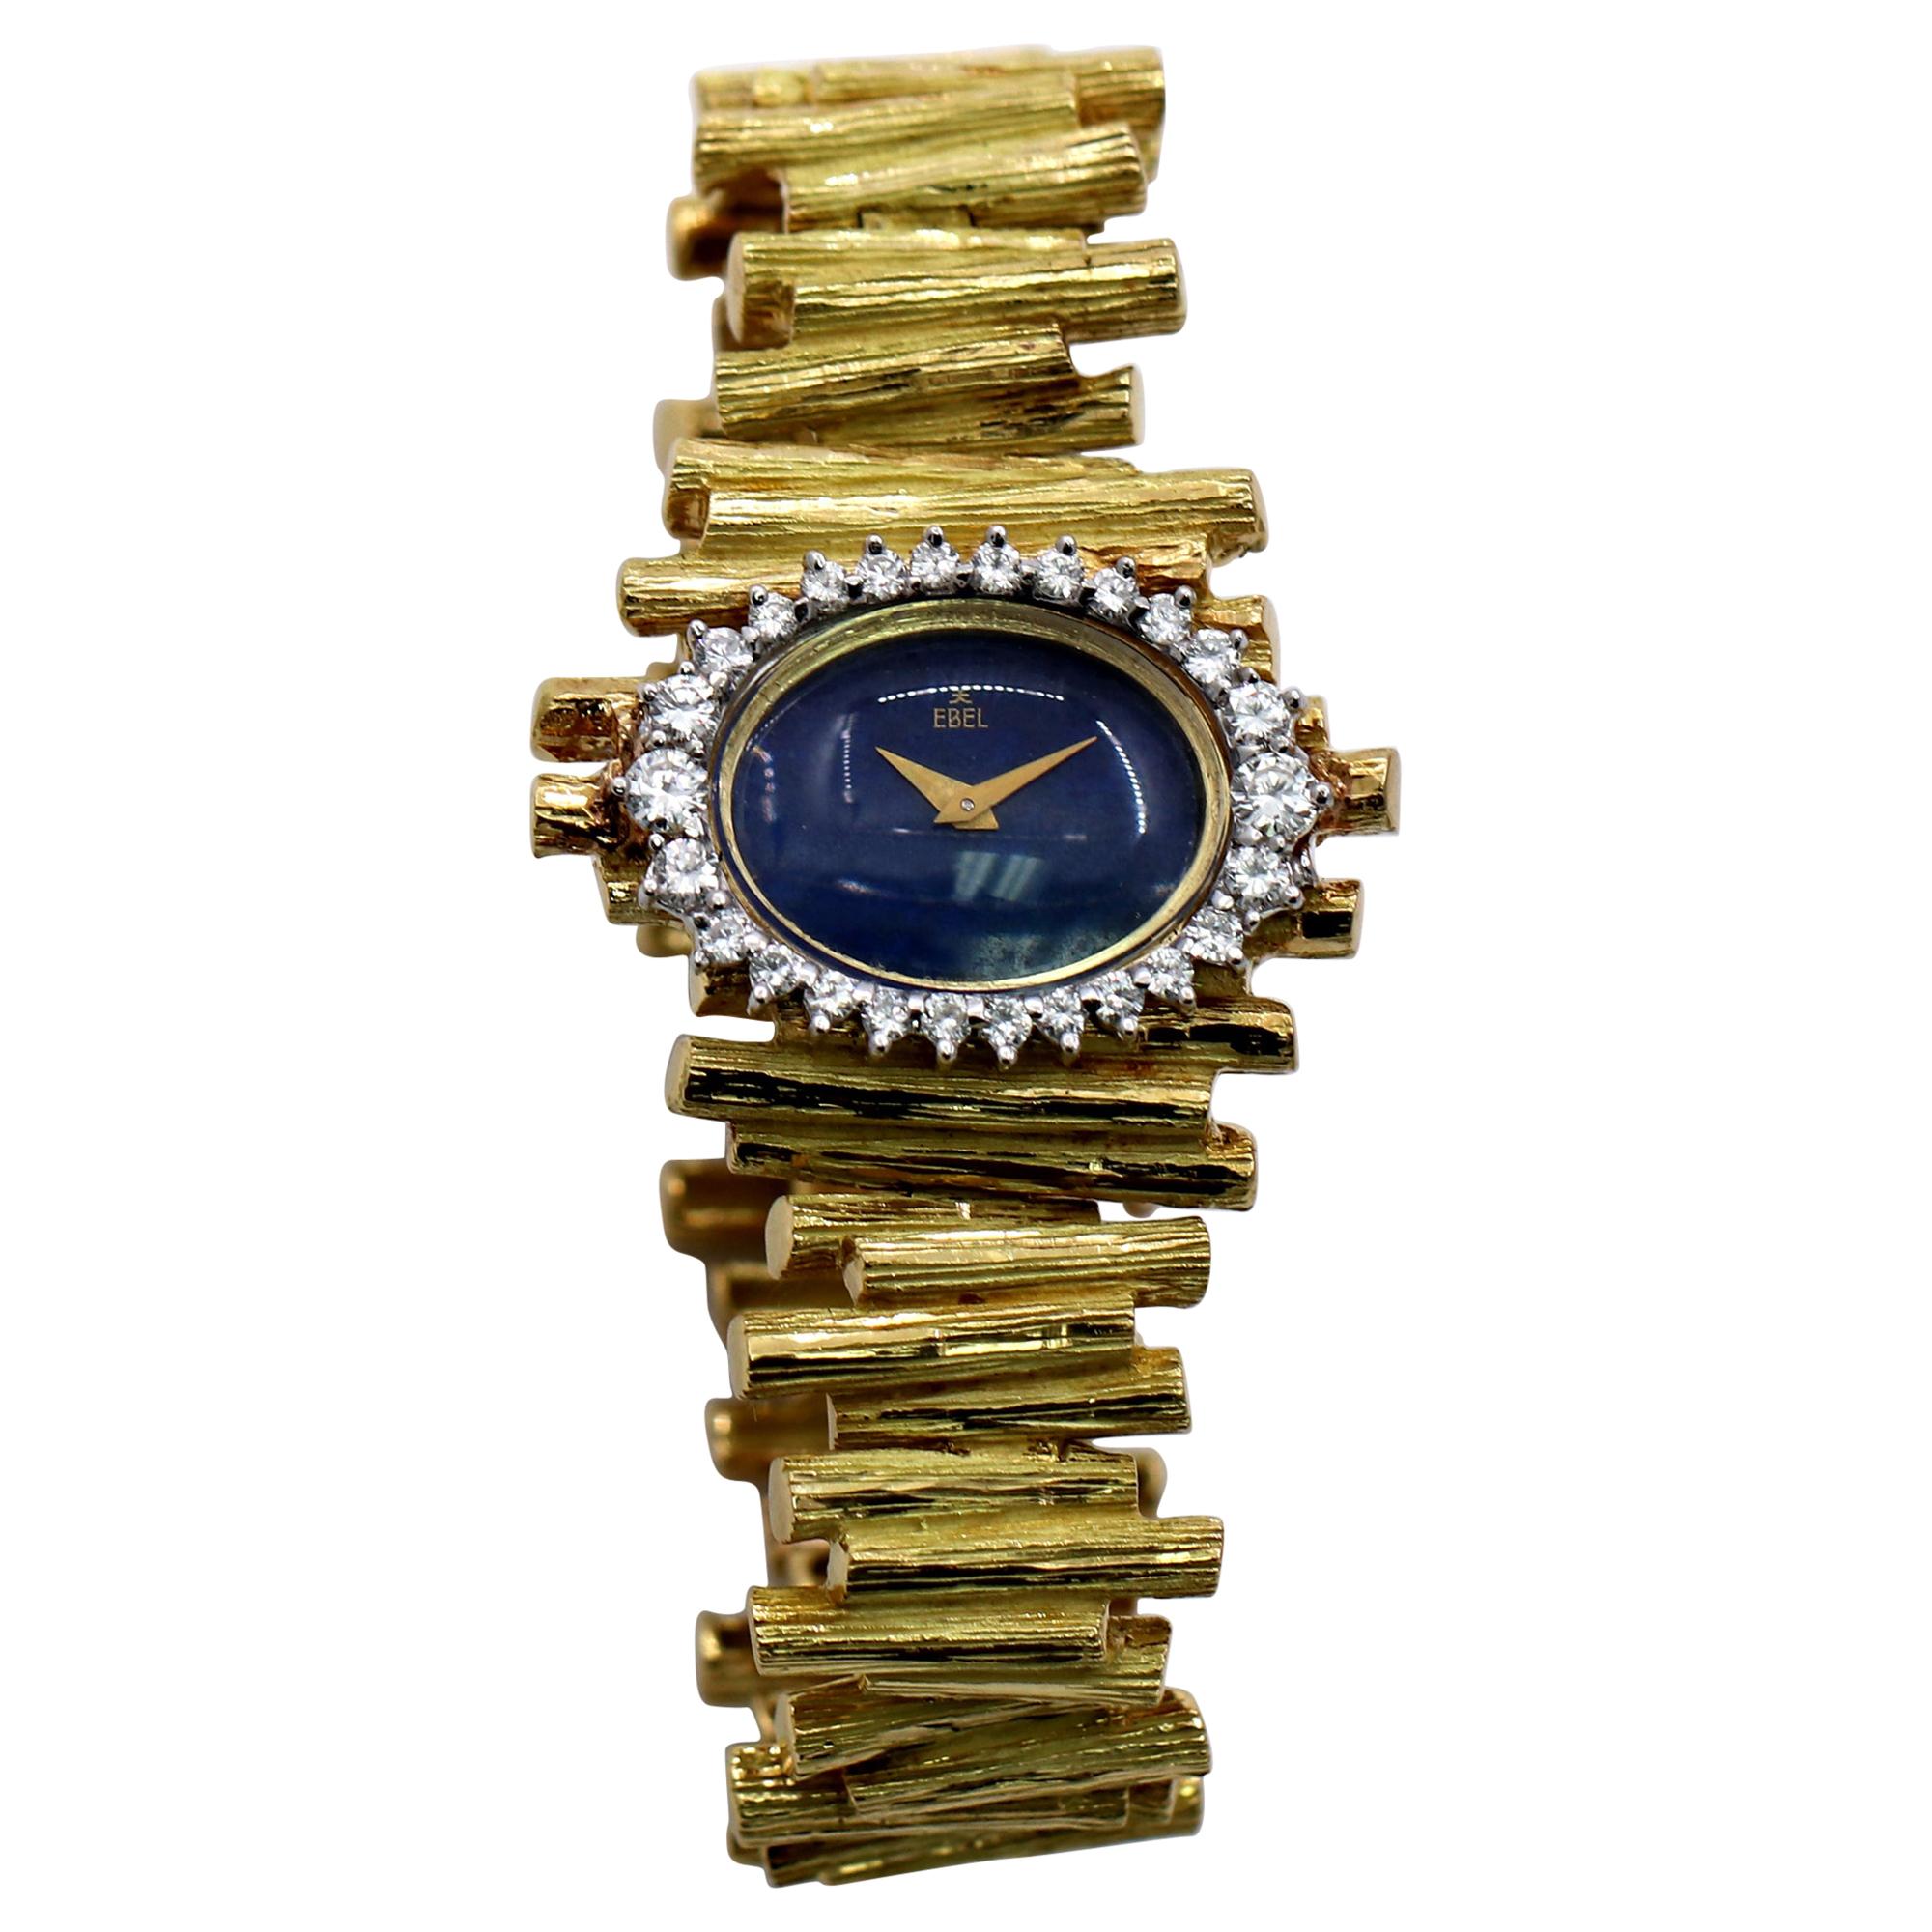 1960s Ebel Watch with Lapis Lazuli Dial and Diamond Bezel